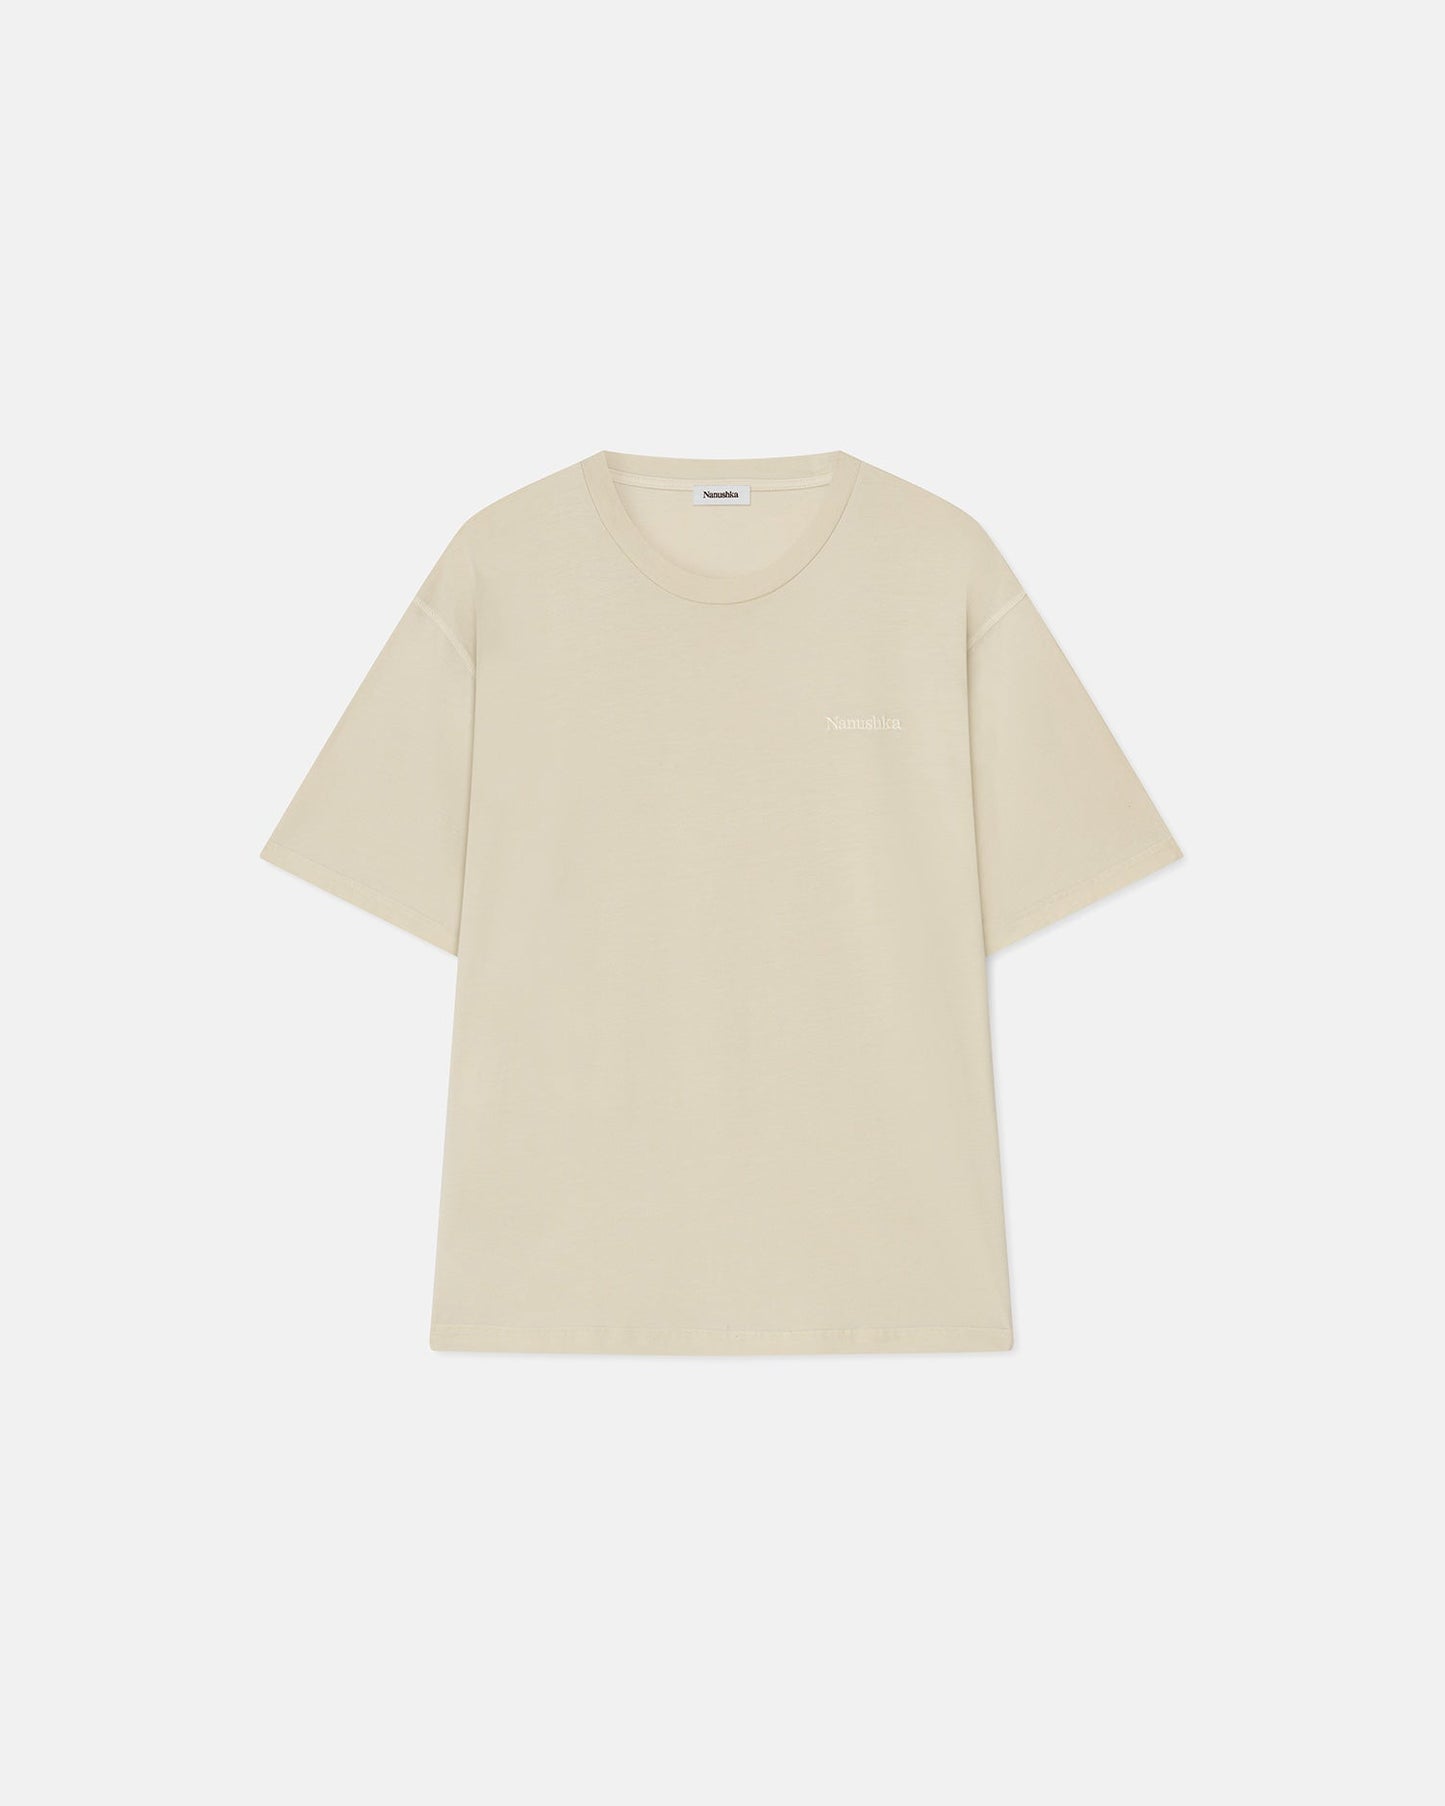 Reece - Organically Grown Cotton T-Shirt - Shell Symbol